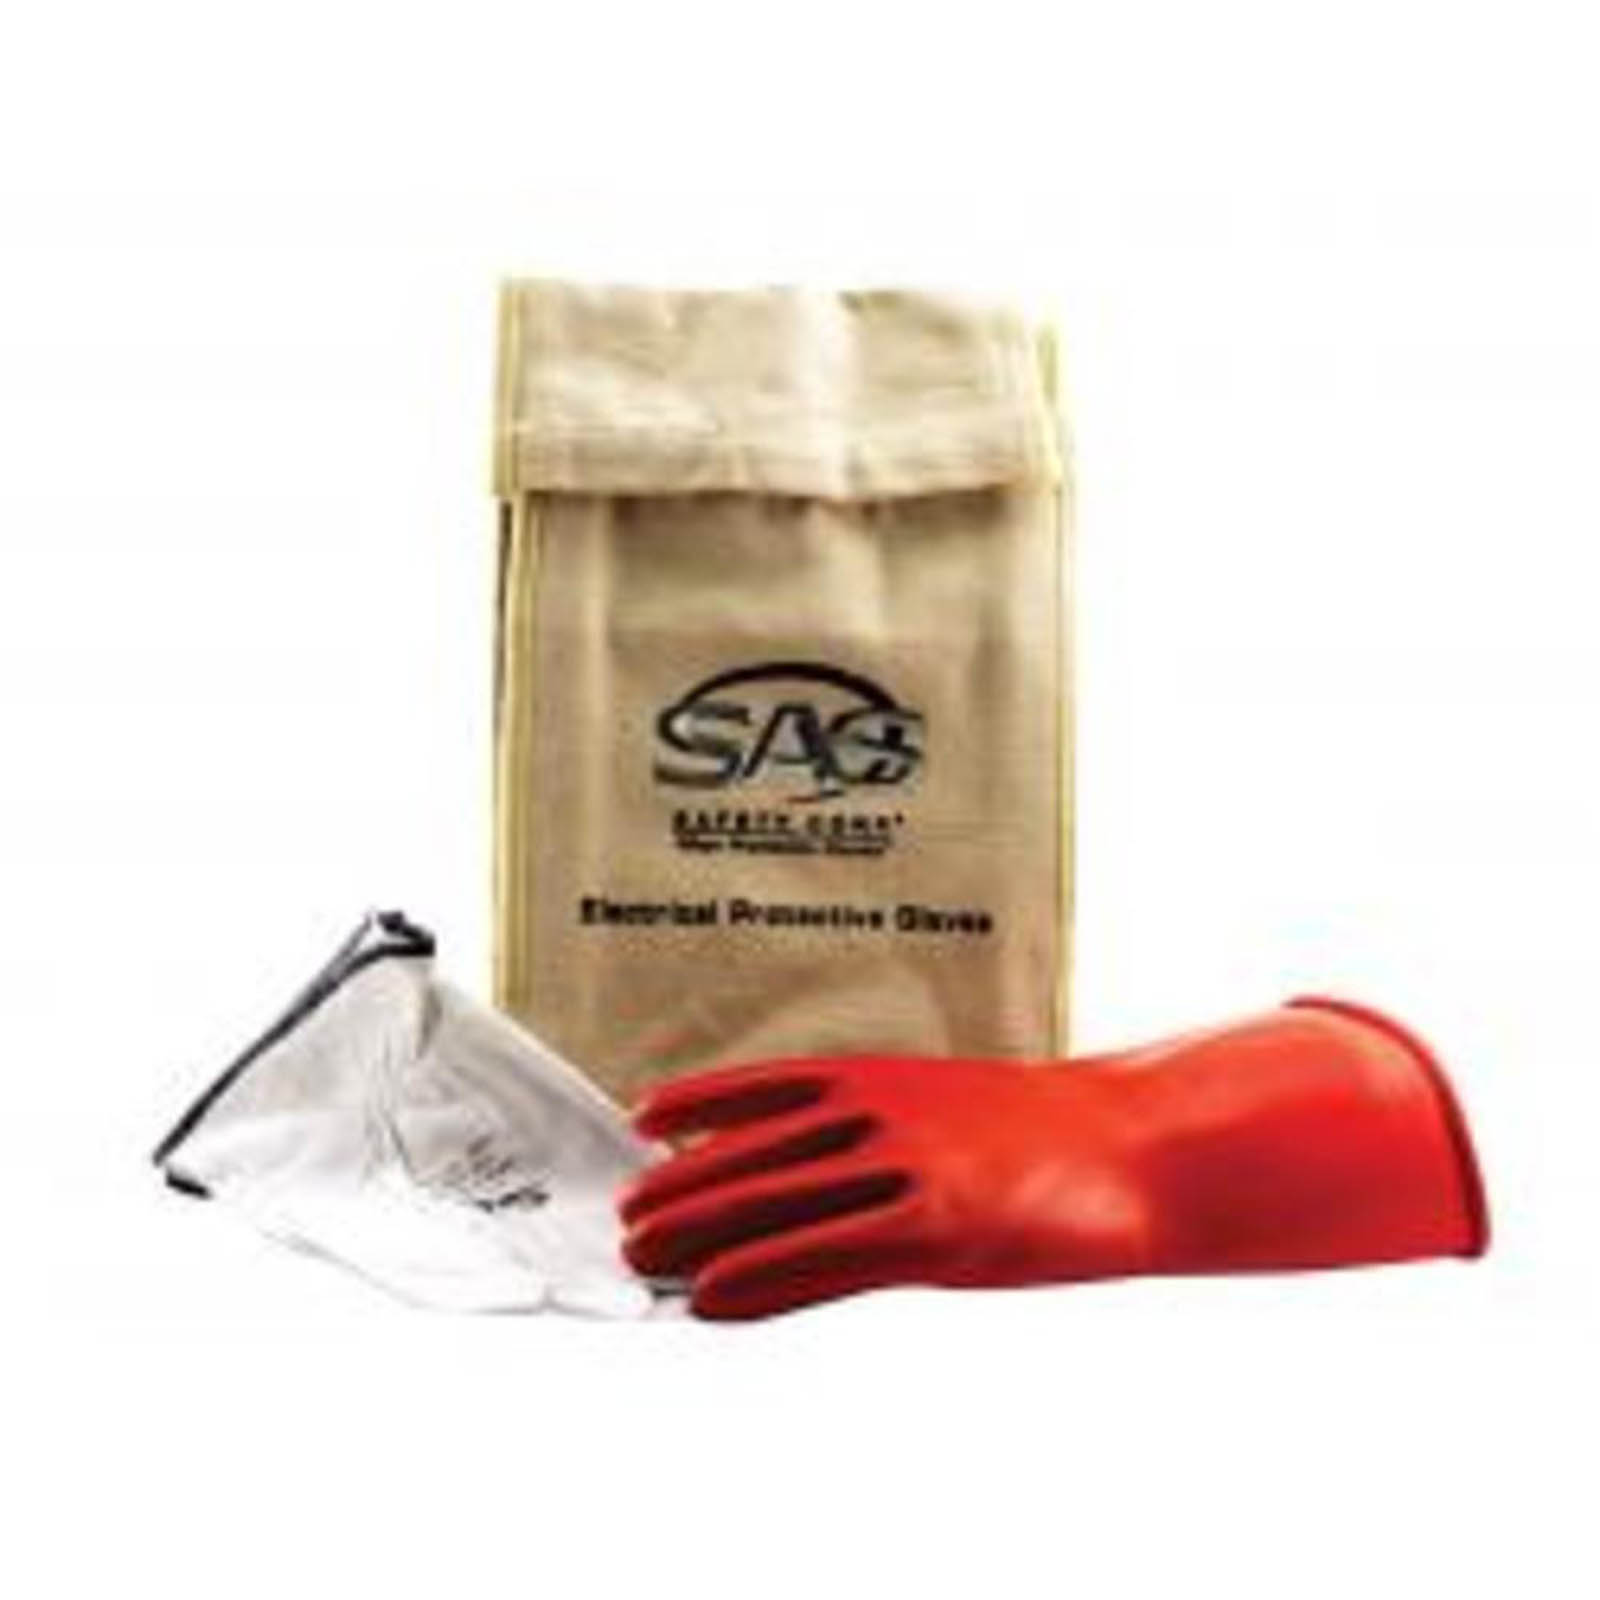 SAS Safety 6478 Large Electric Service Glove